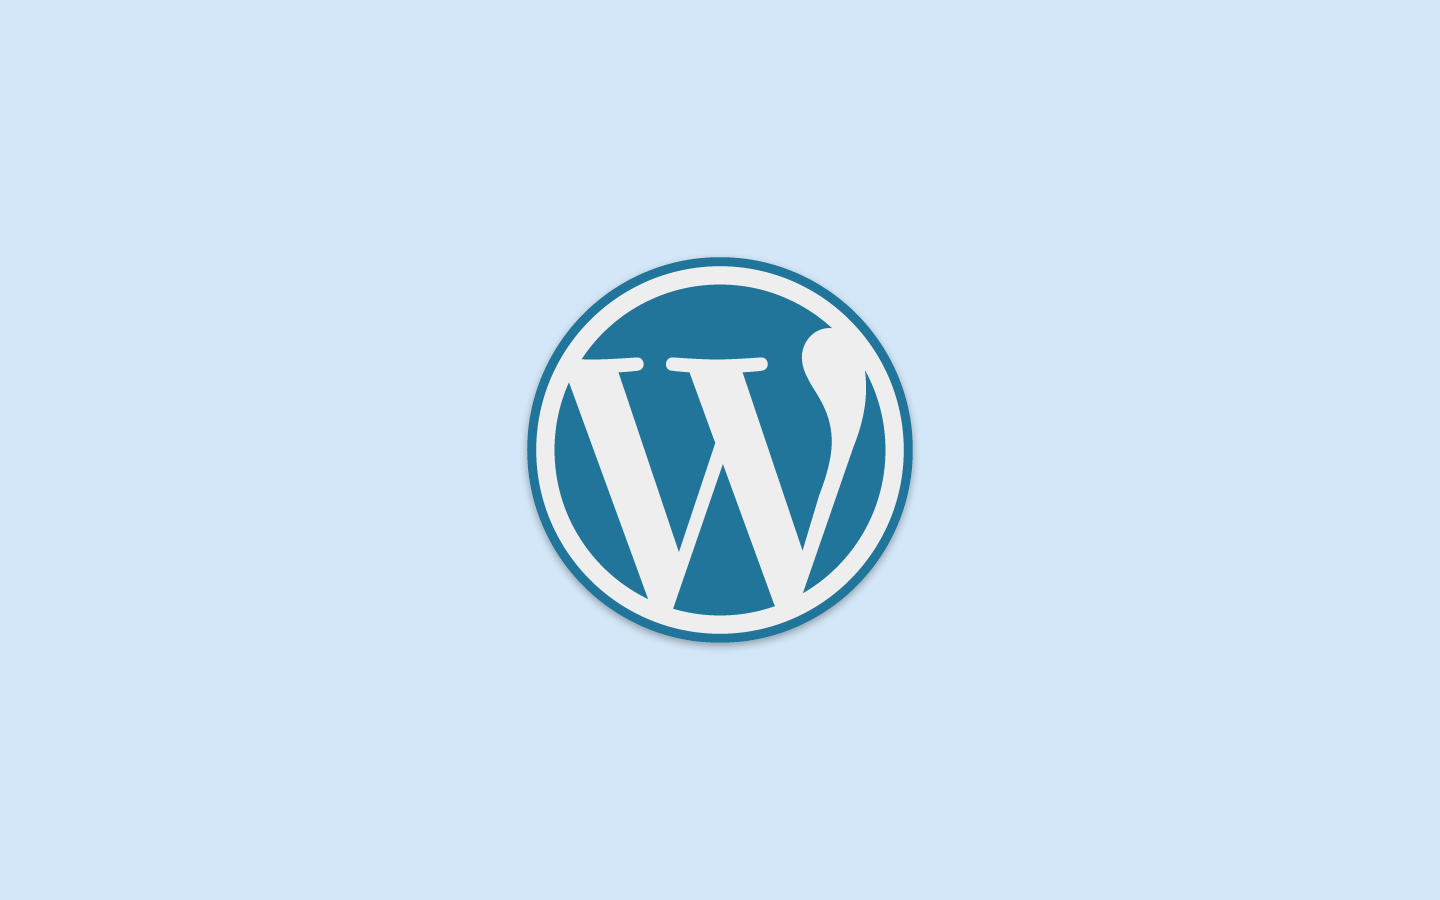 Getting better at customizing WordPress